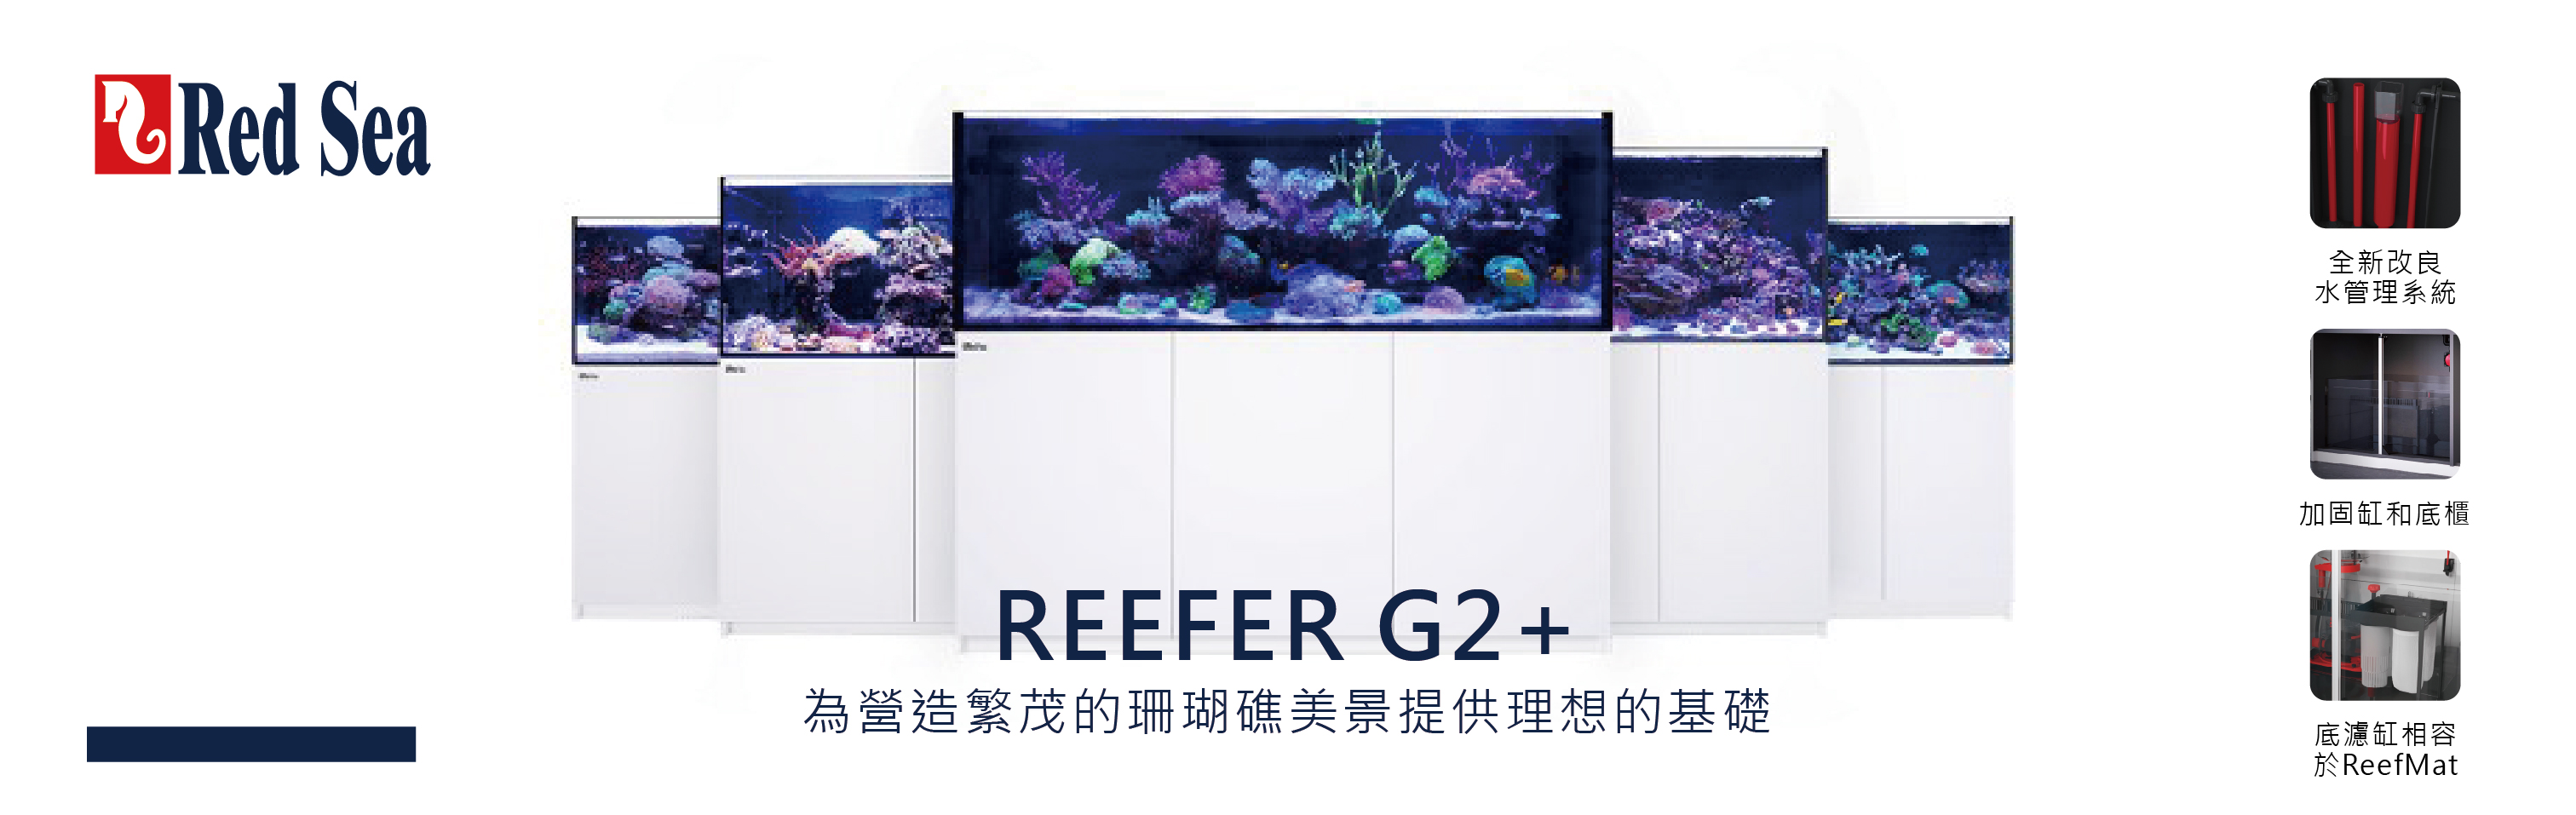 Reefer G2+